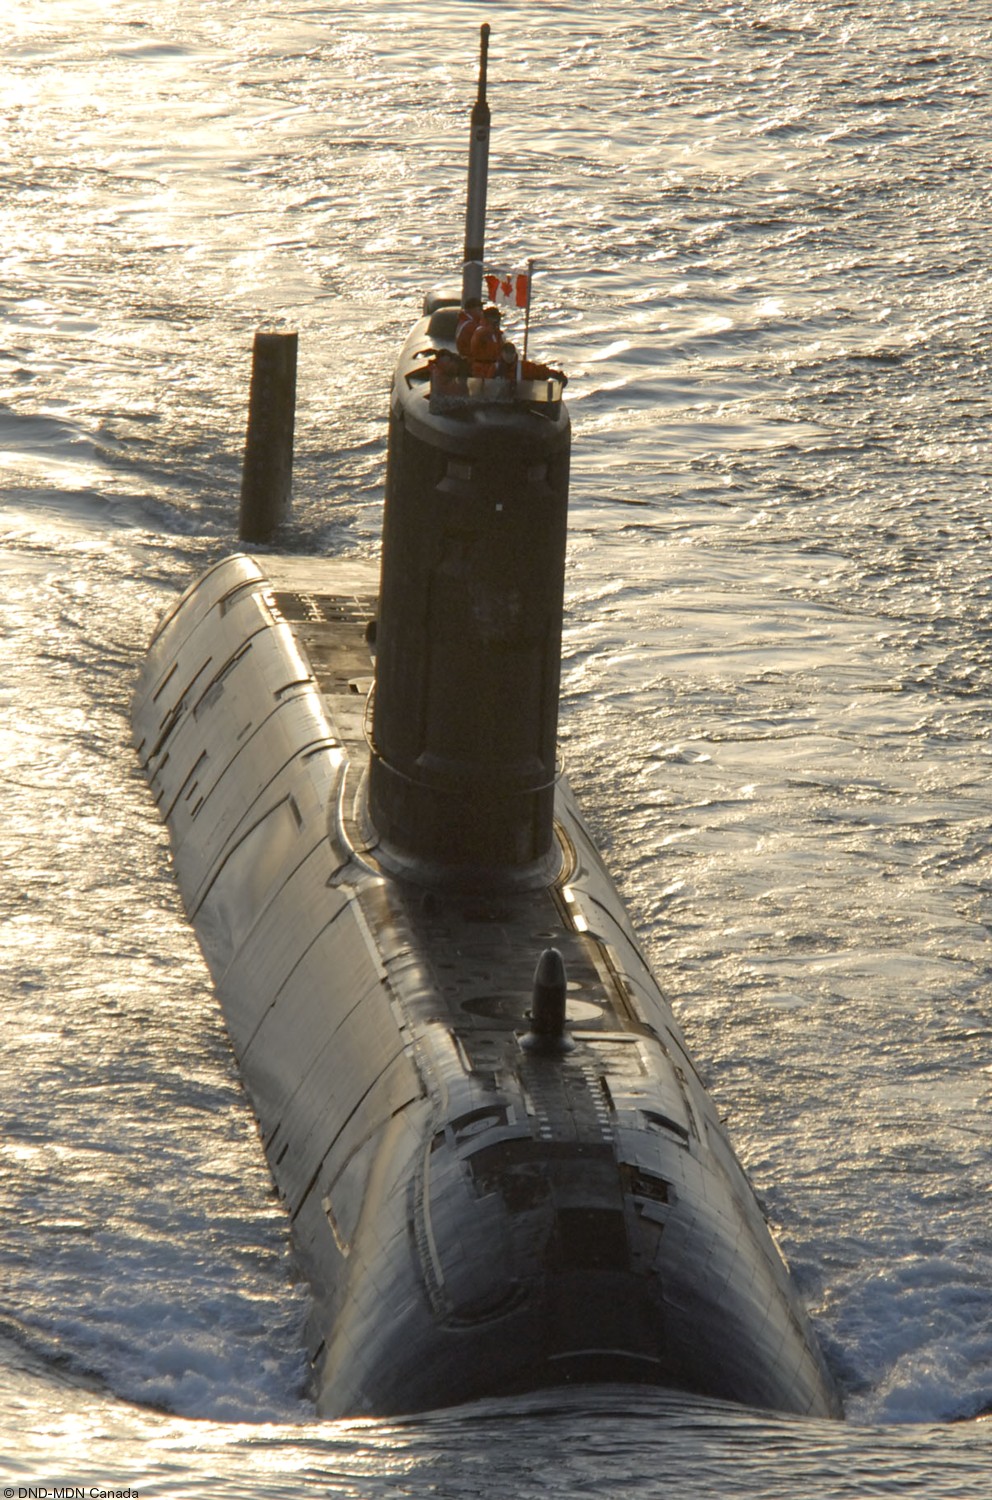 ssk-878 hmcs corner brook victoria upholder class patrol submarine ncsm royal canadian navy 15